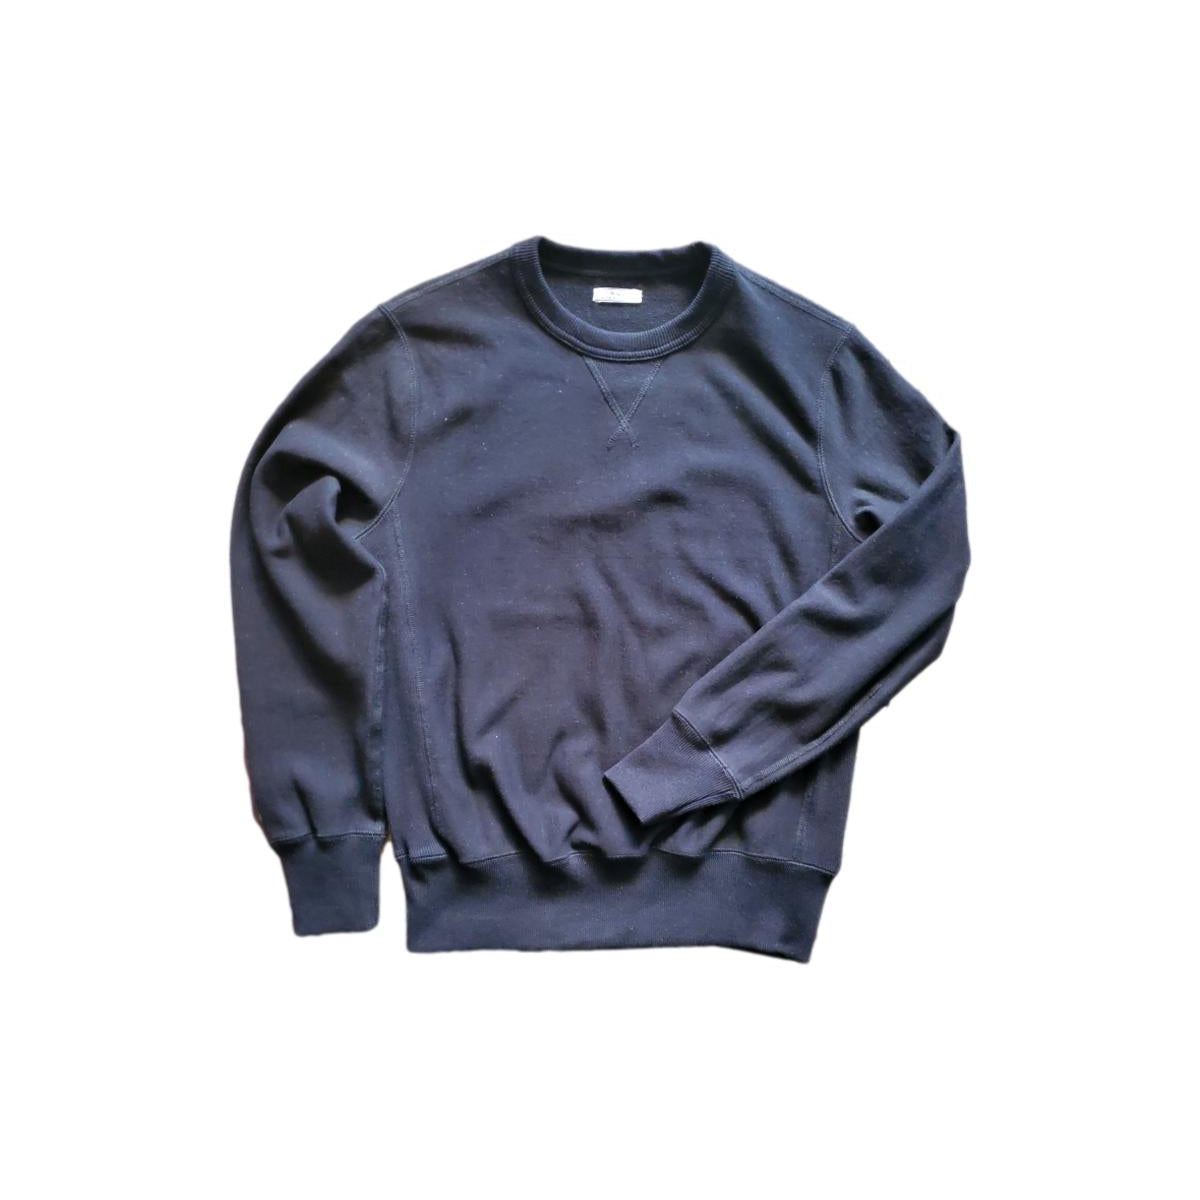 Unisex French Terry Sweatshirt in Black